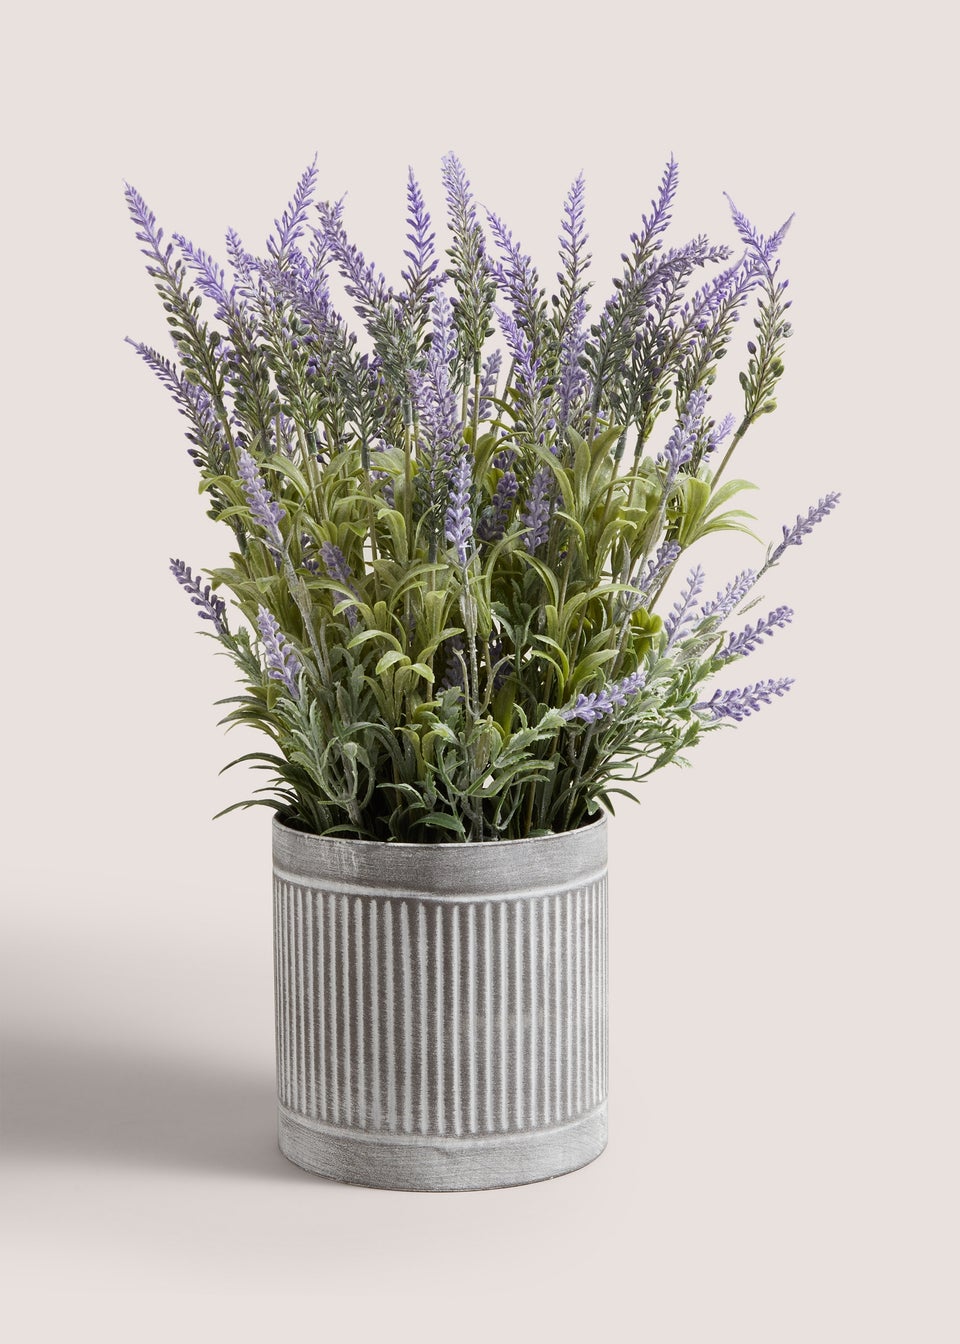 Lavender Plant In Metal Pot (45cm x 30cm x 28cm)